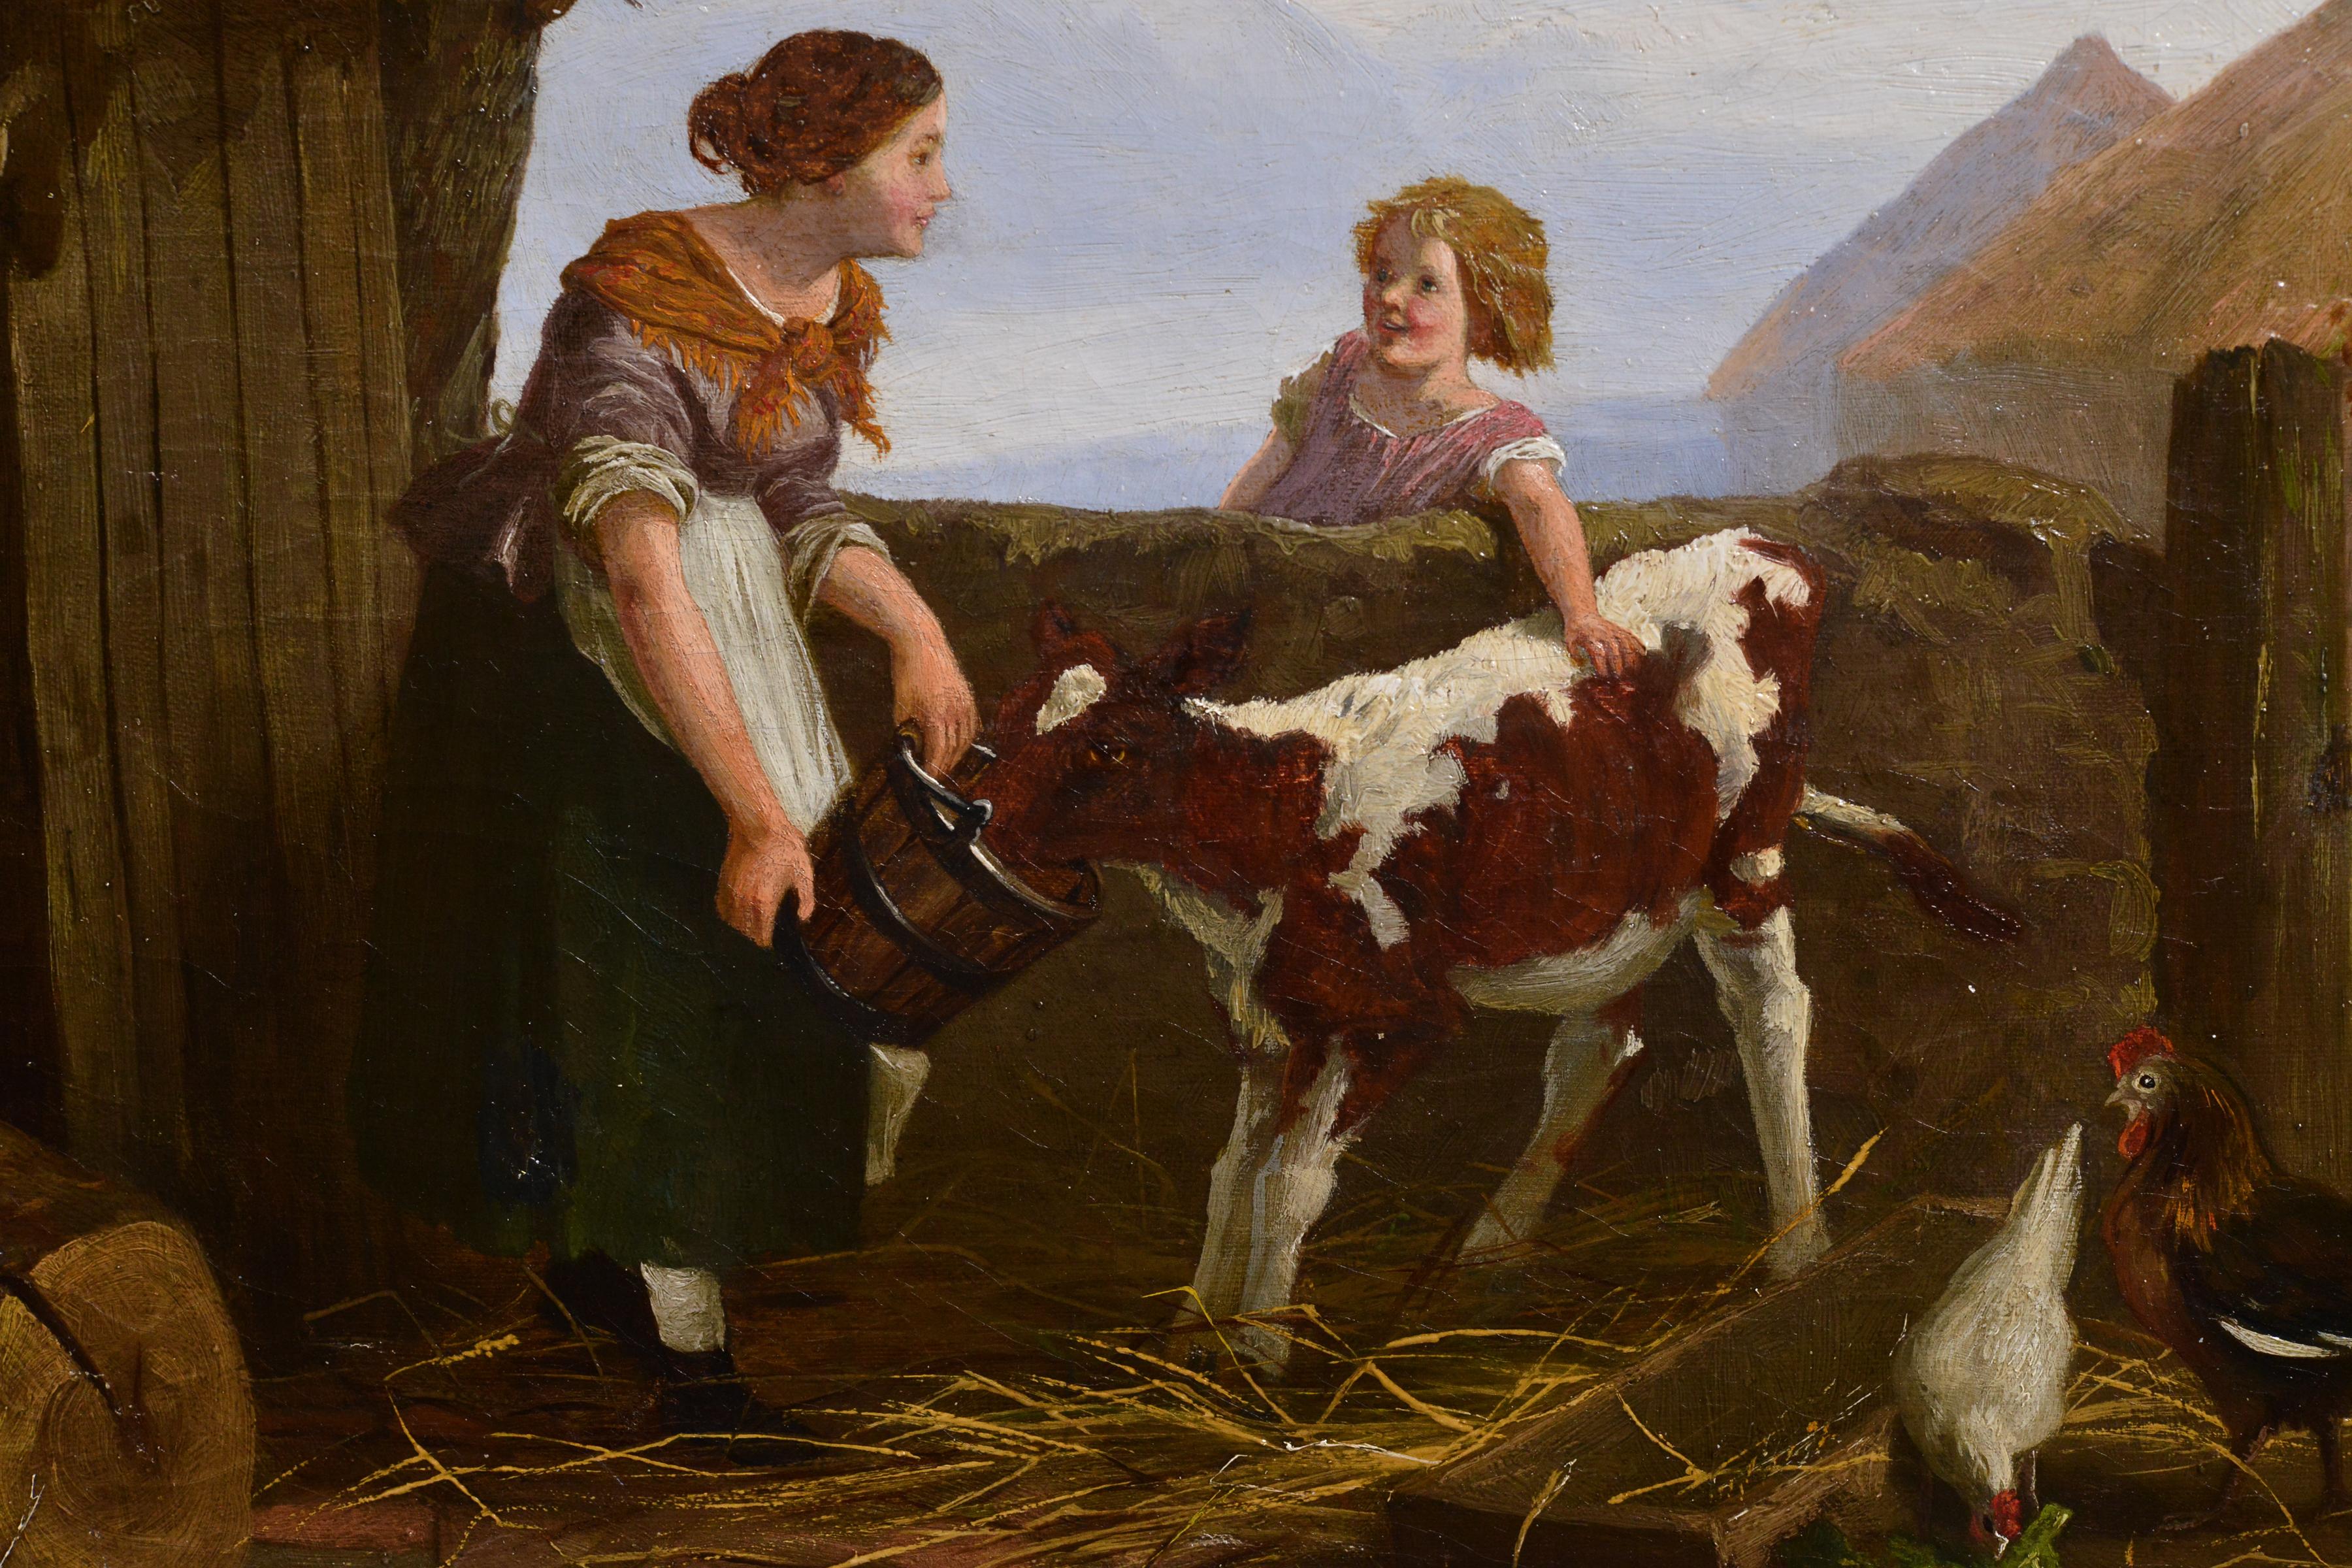 Feeding a Calf Lovely Farm Scene with Redhead Girl mid 19th Century Oil Painting For Sale 1